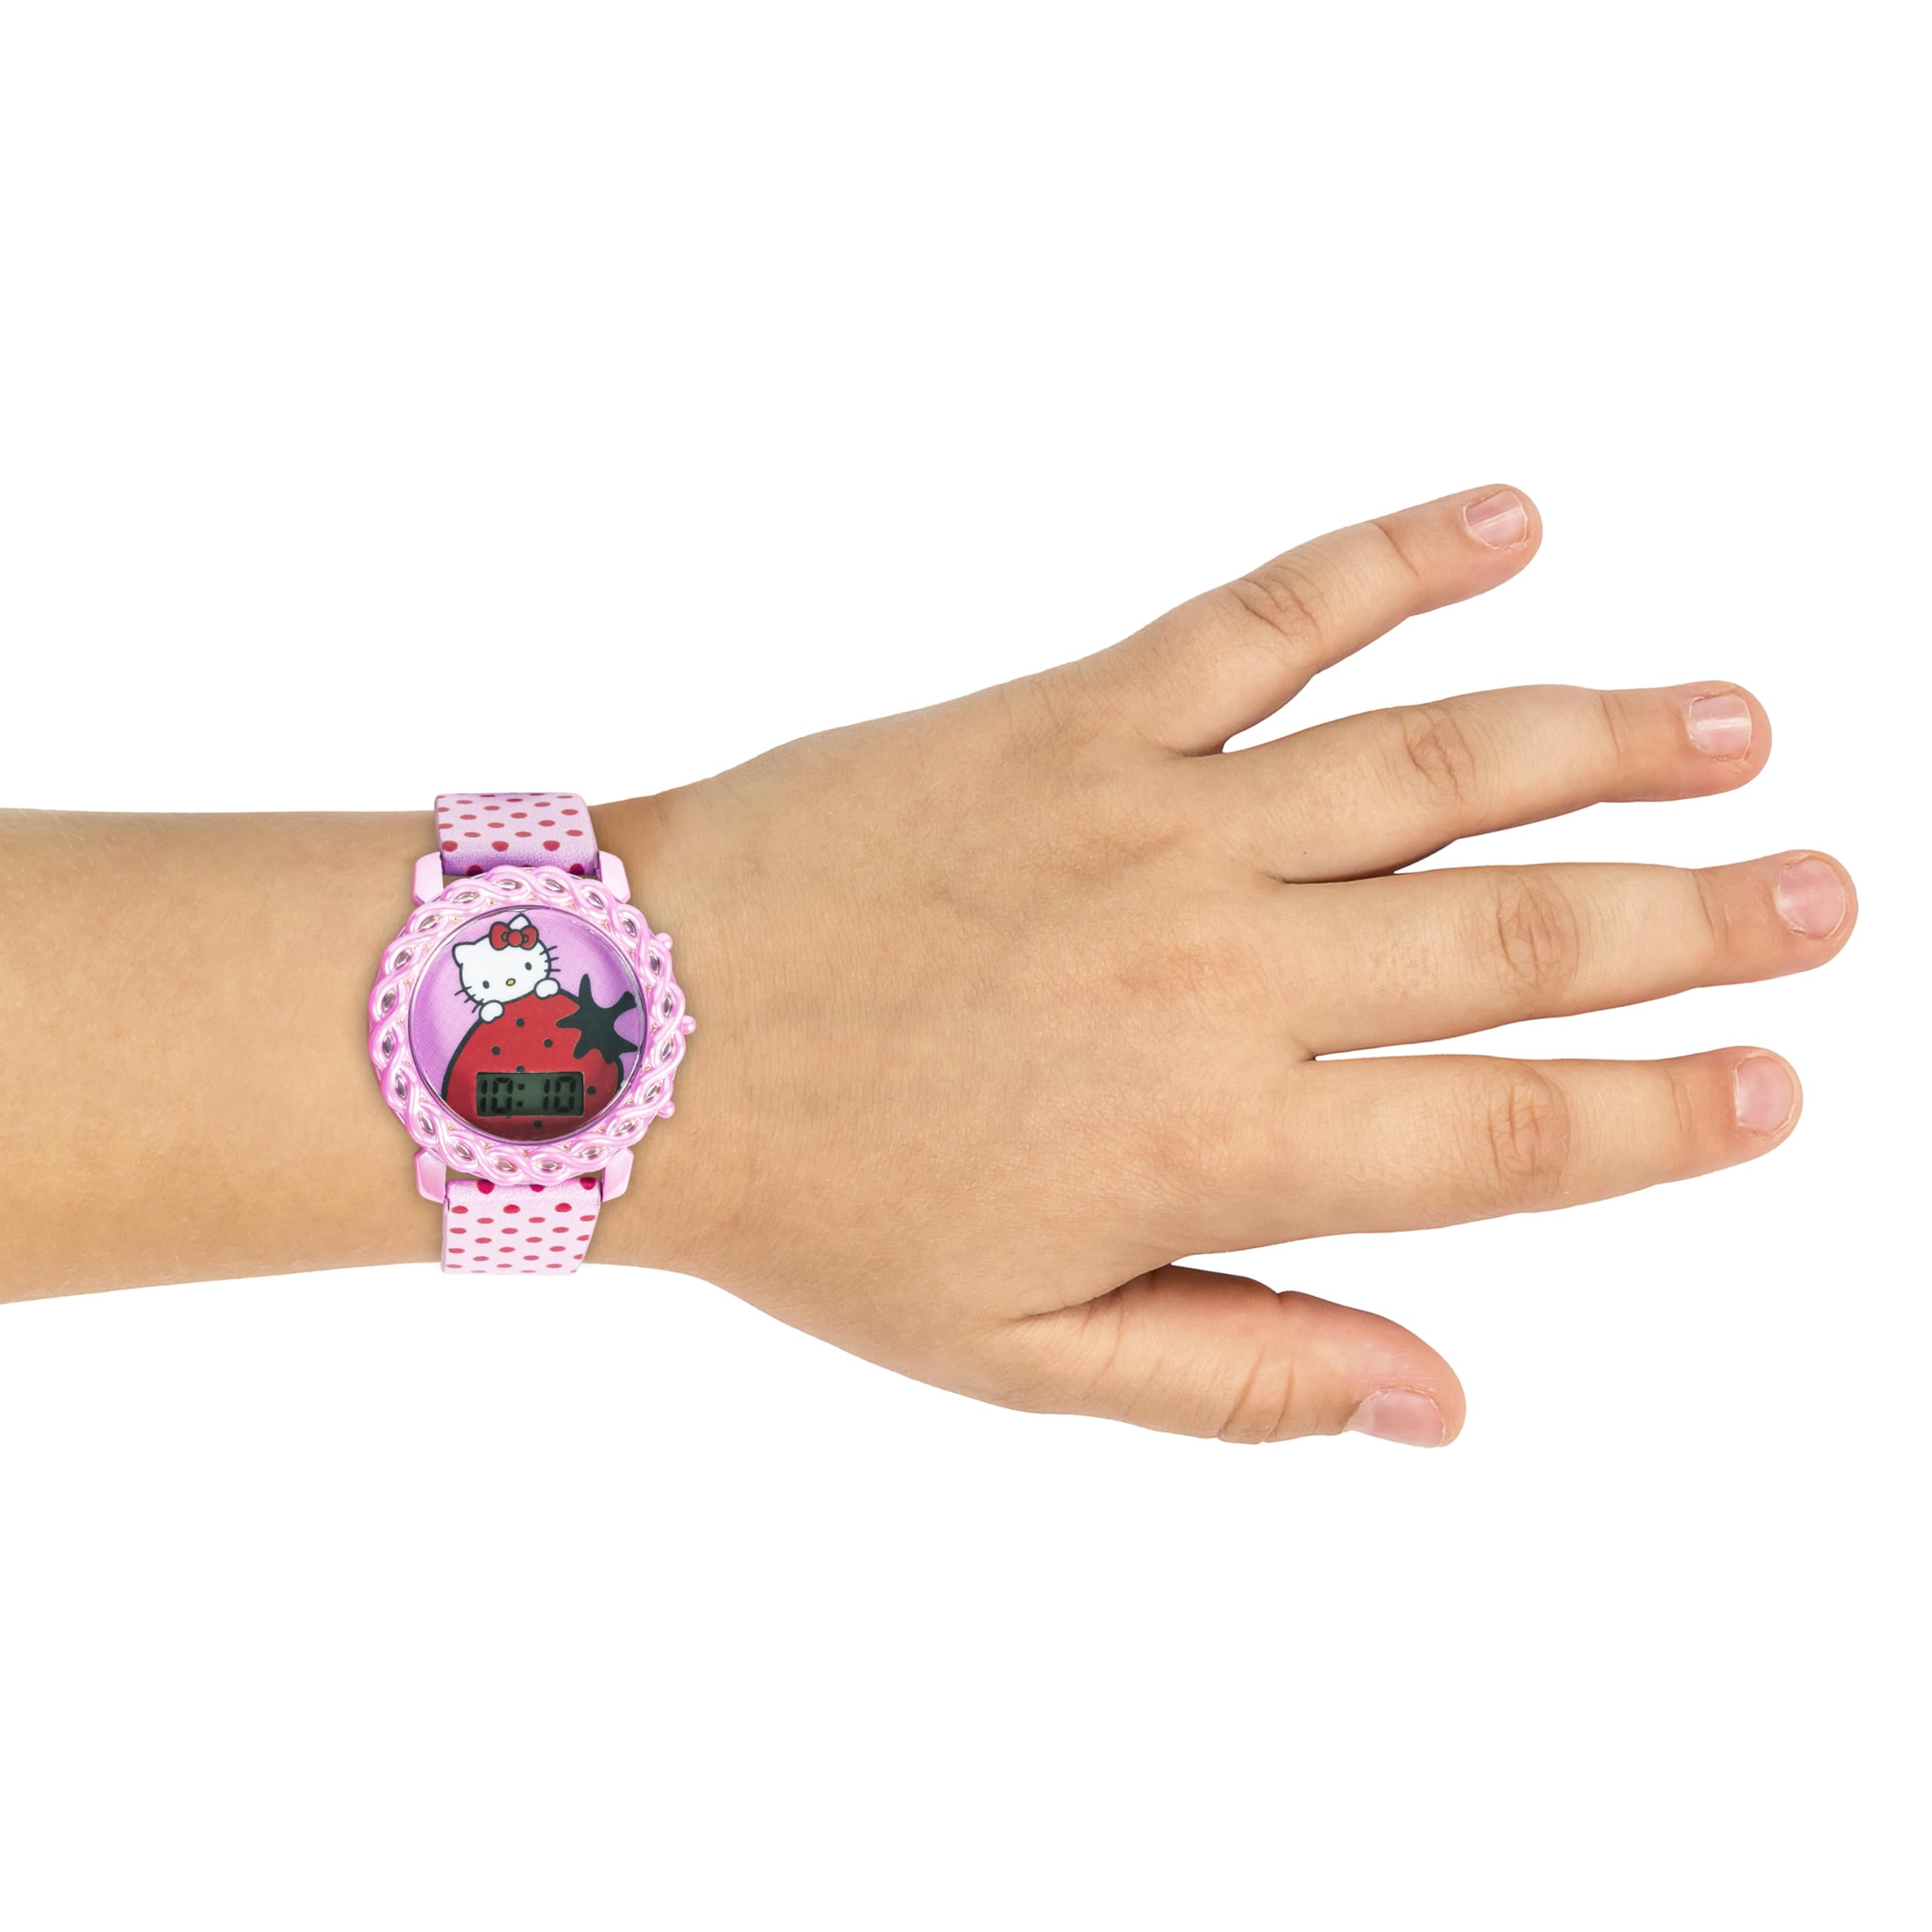 Accutime Hello Kitty Digital LCD Quartz Light Up Kids Pink Watch for Girls with Polka Dot Print Band Strap (Model: HK4190AZ)